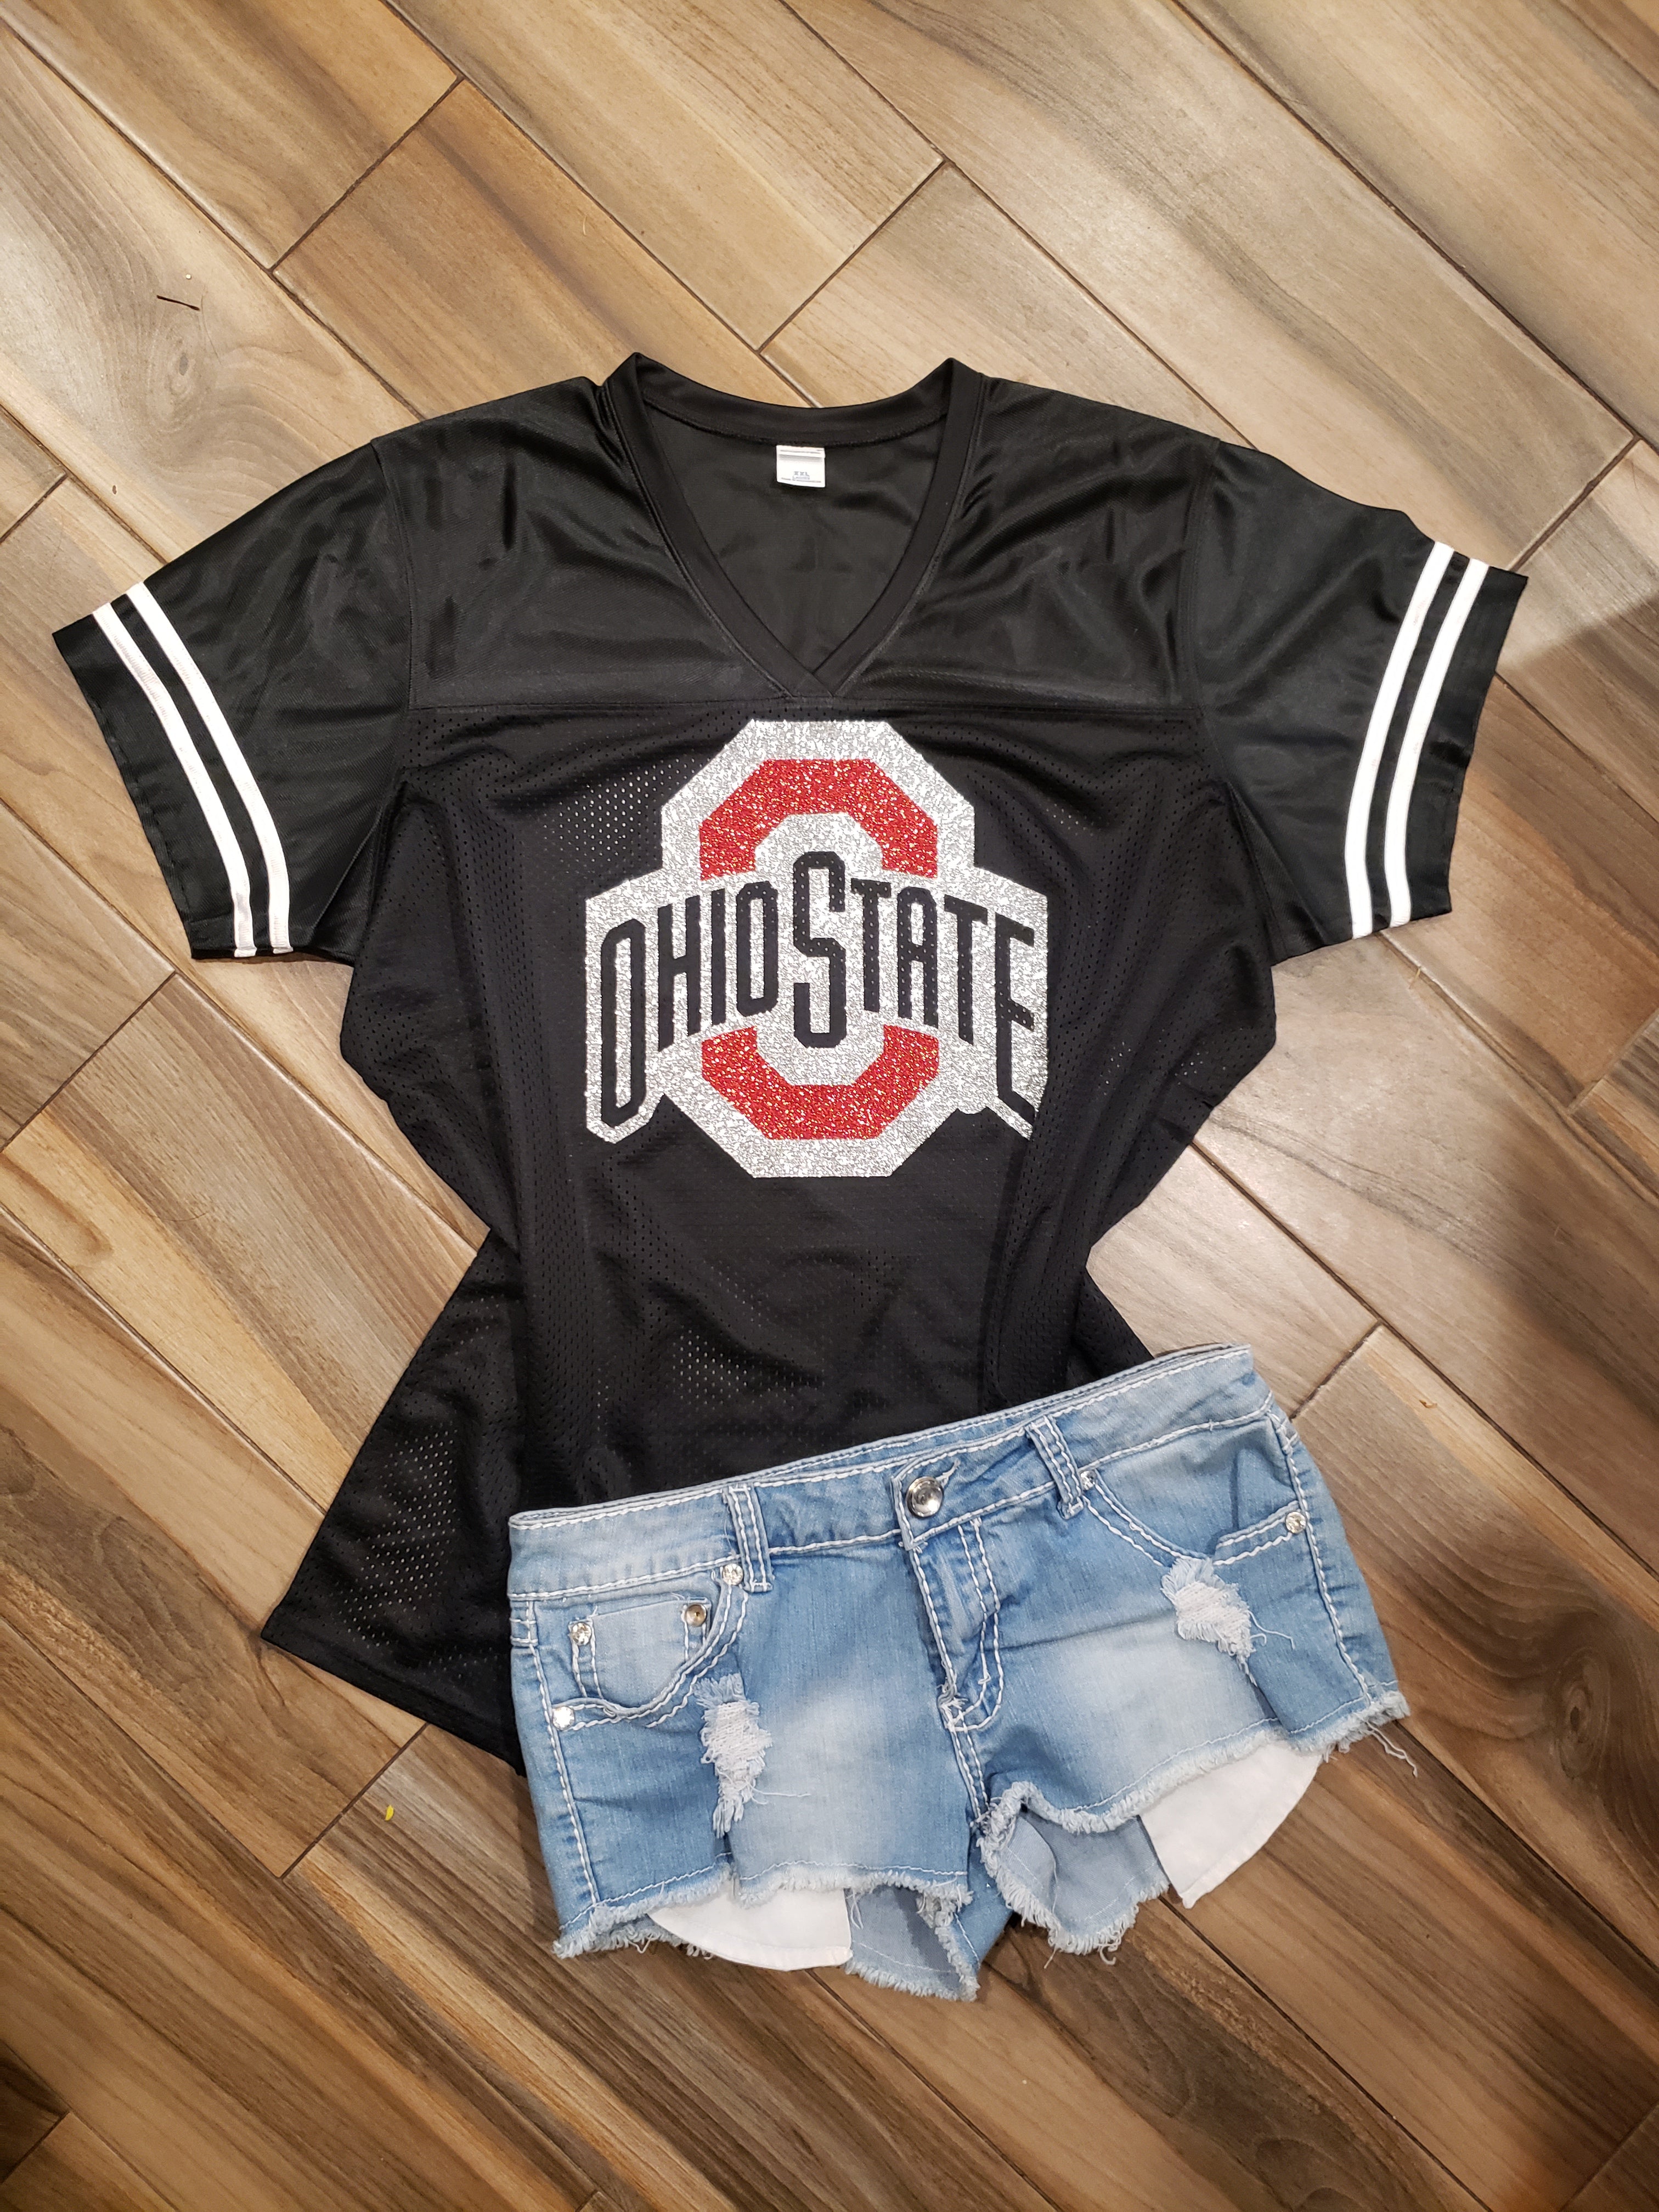 Ohio State Glitter Top - Black: College Football Fan Gear & Apparel – LuLu